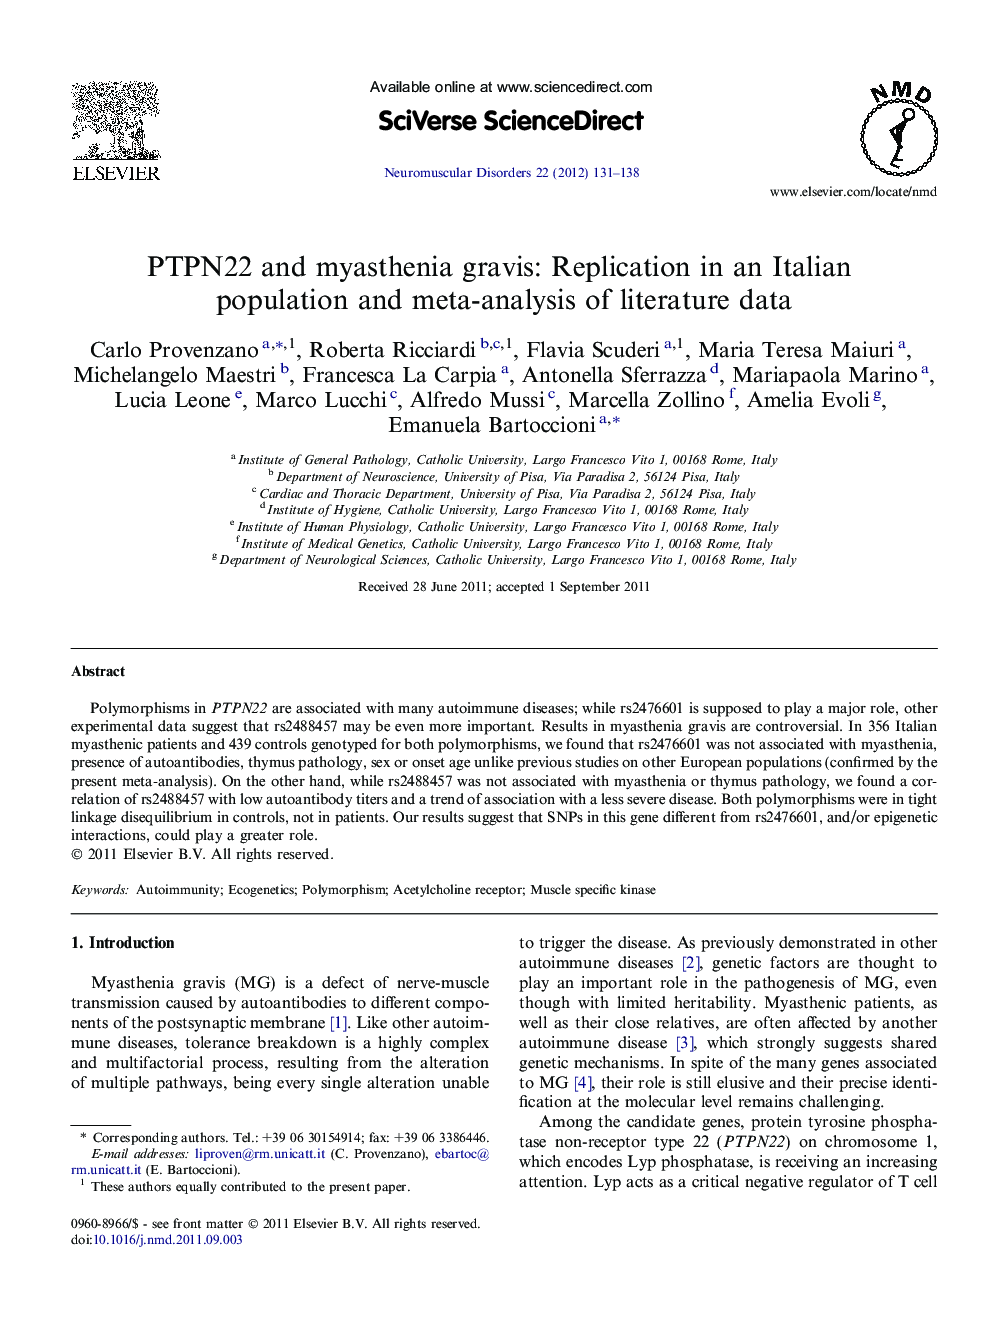 PTPN22 and myasthenia gravis: Replication in an Italian population and meta-analysis of literature data